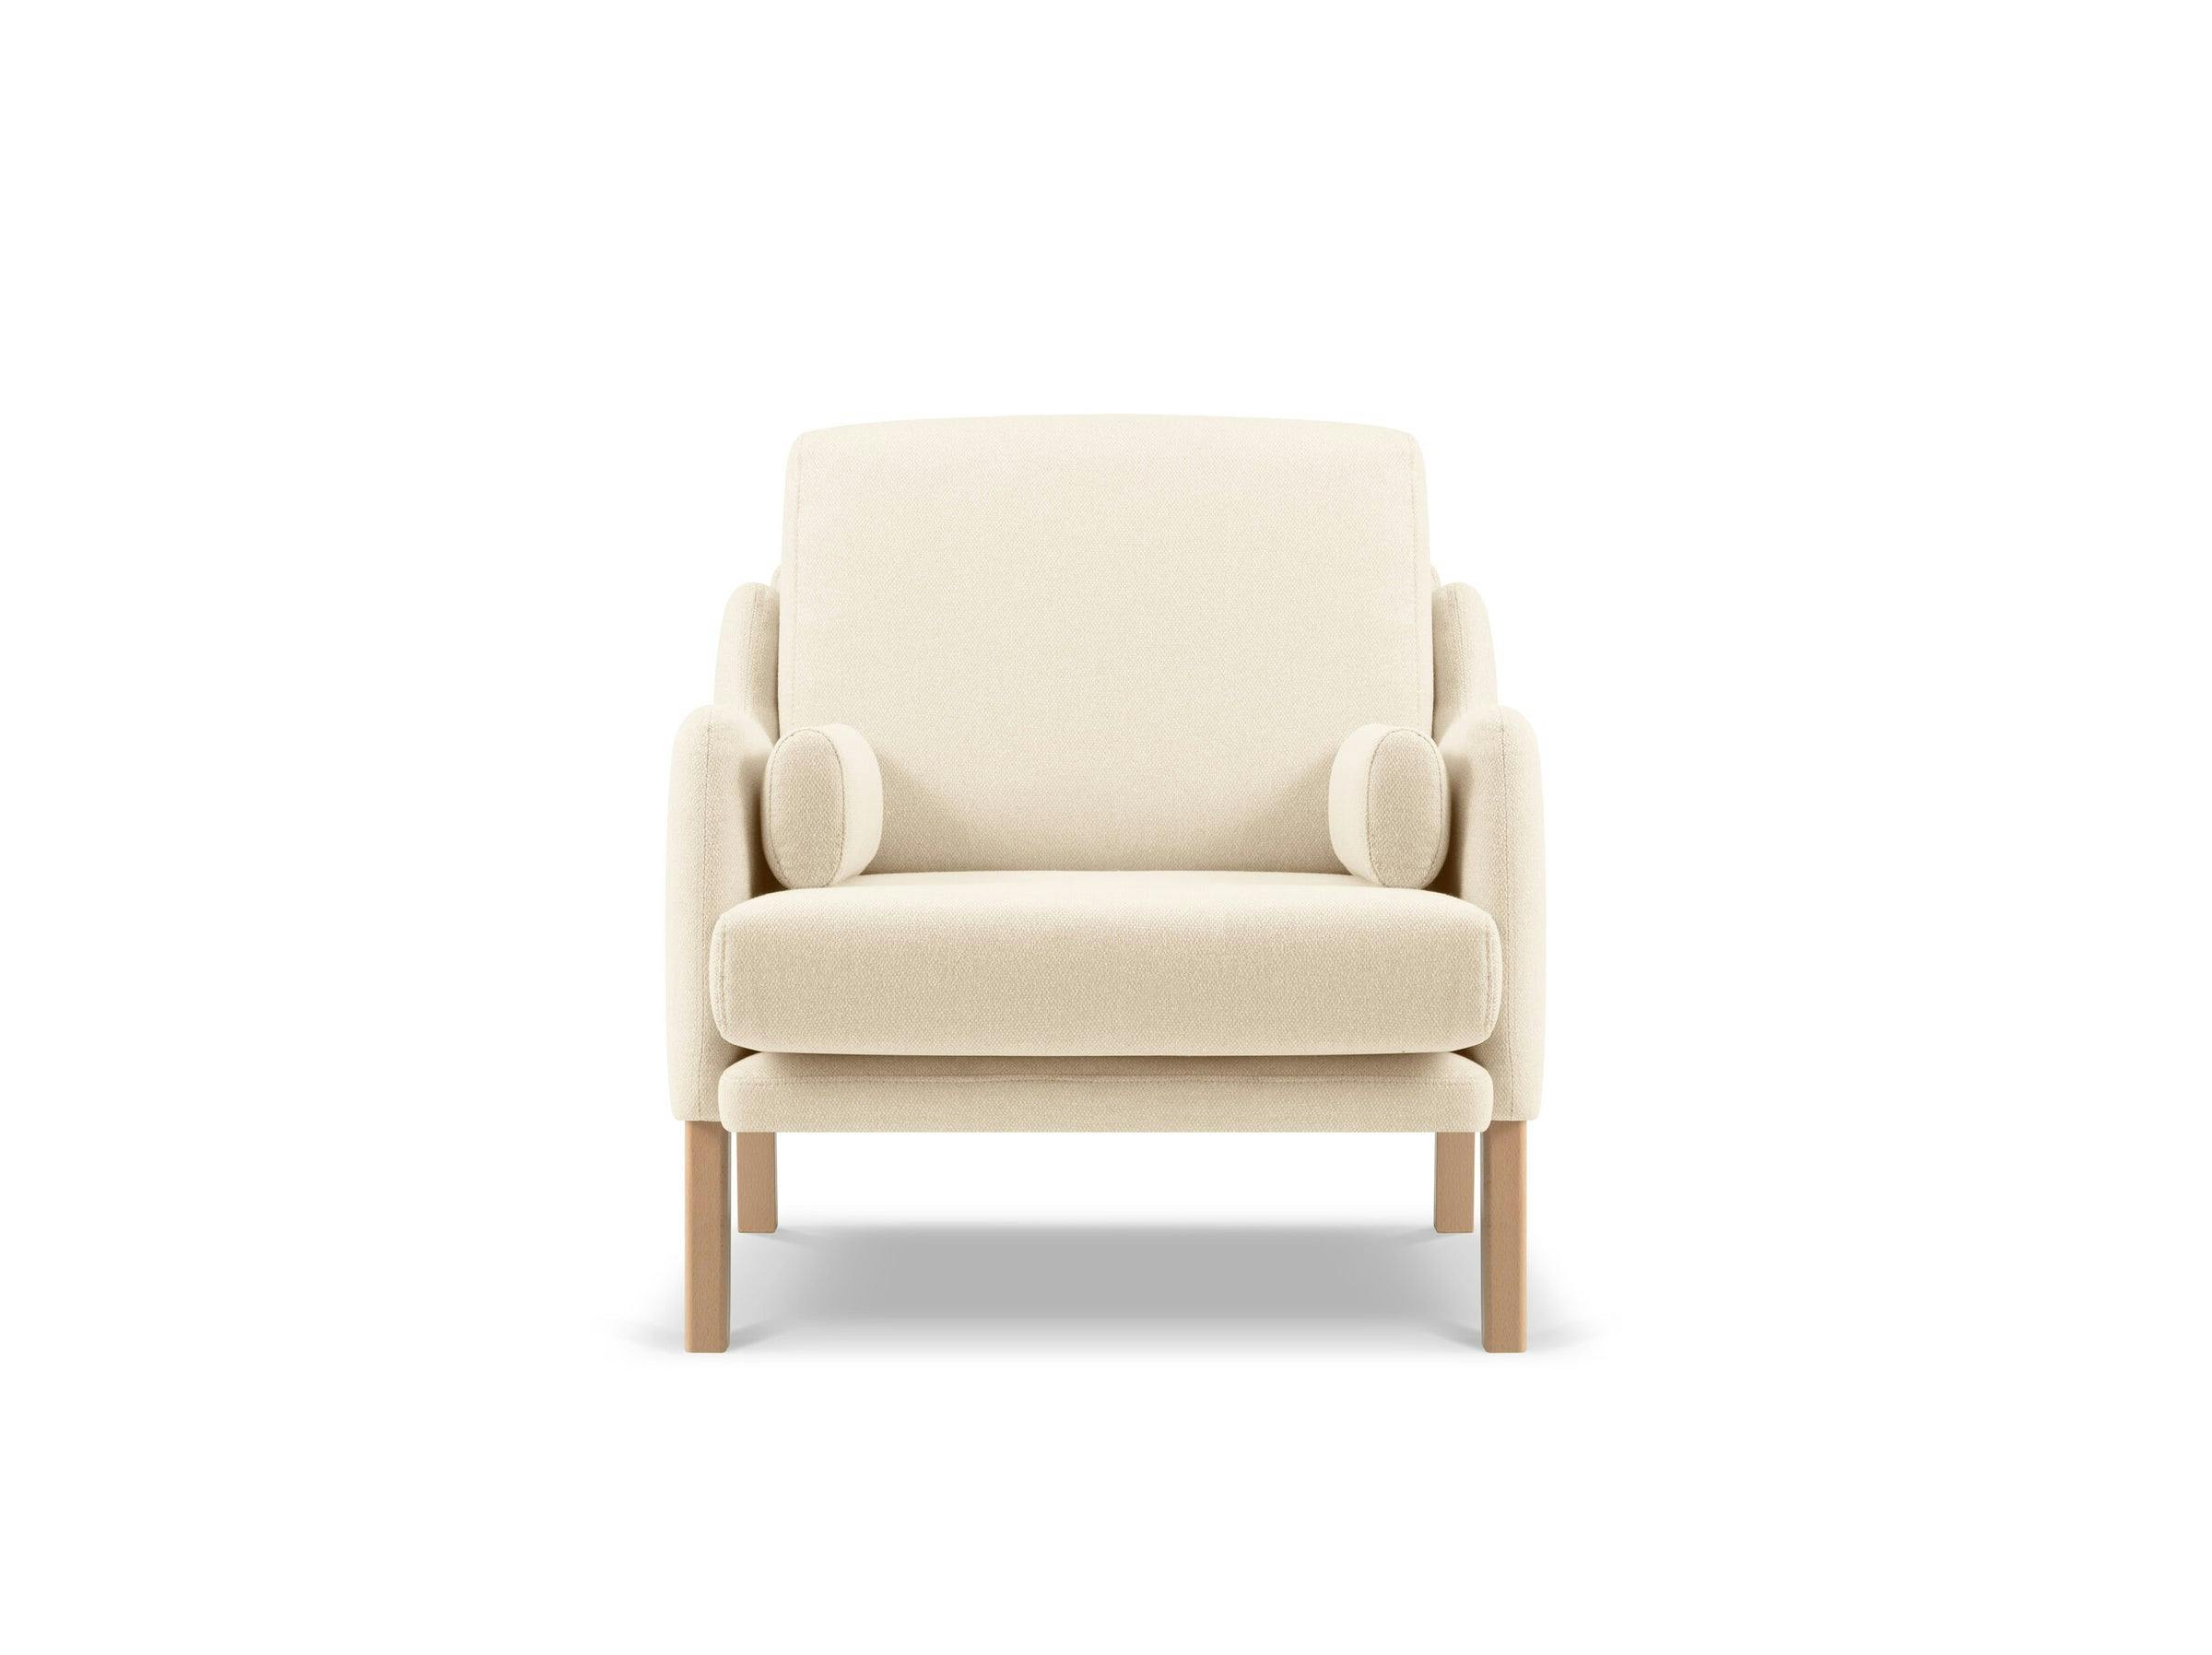 Salto sofas structured fabric beige